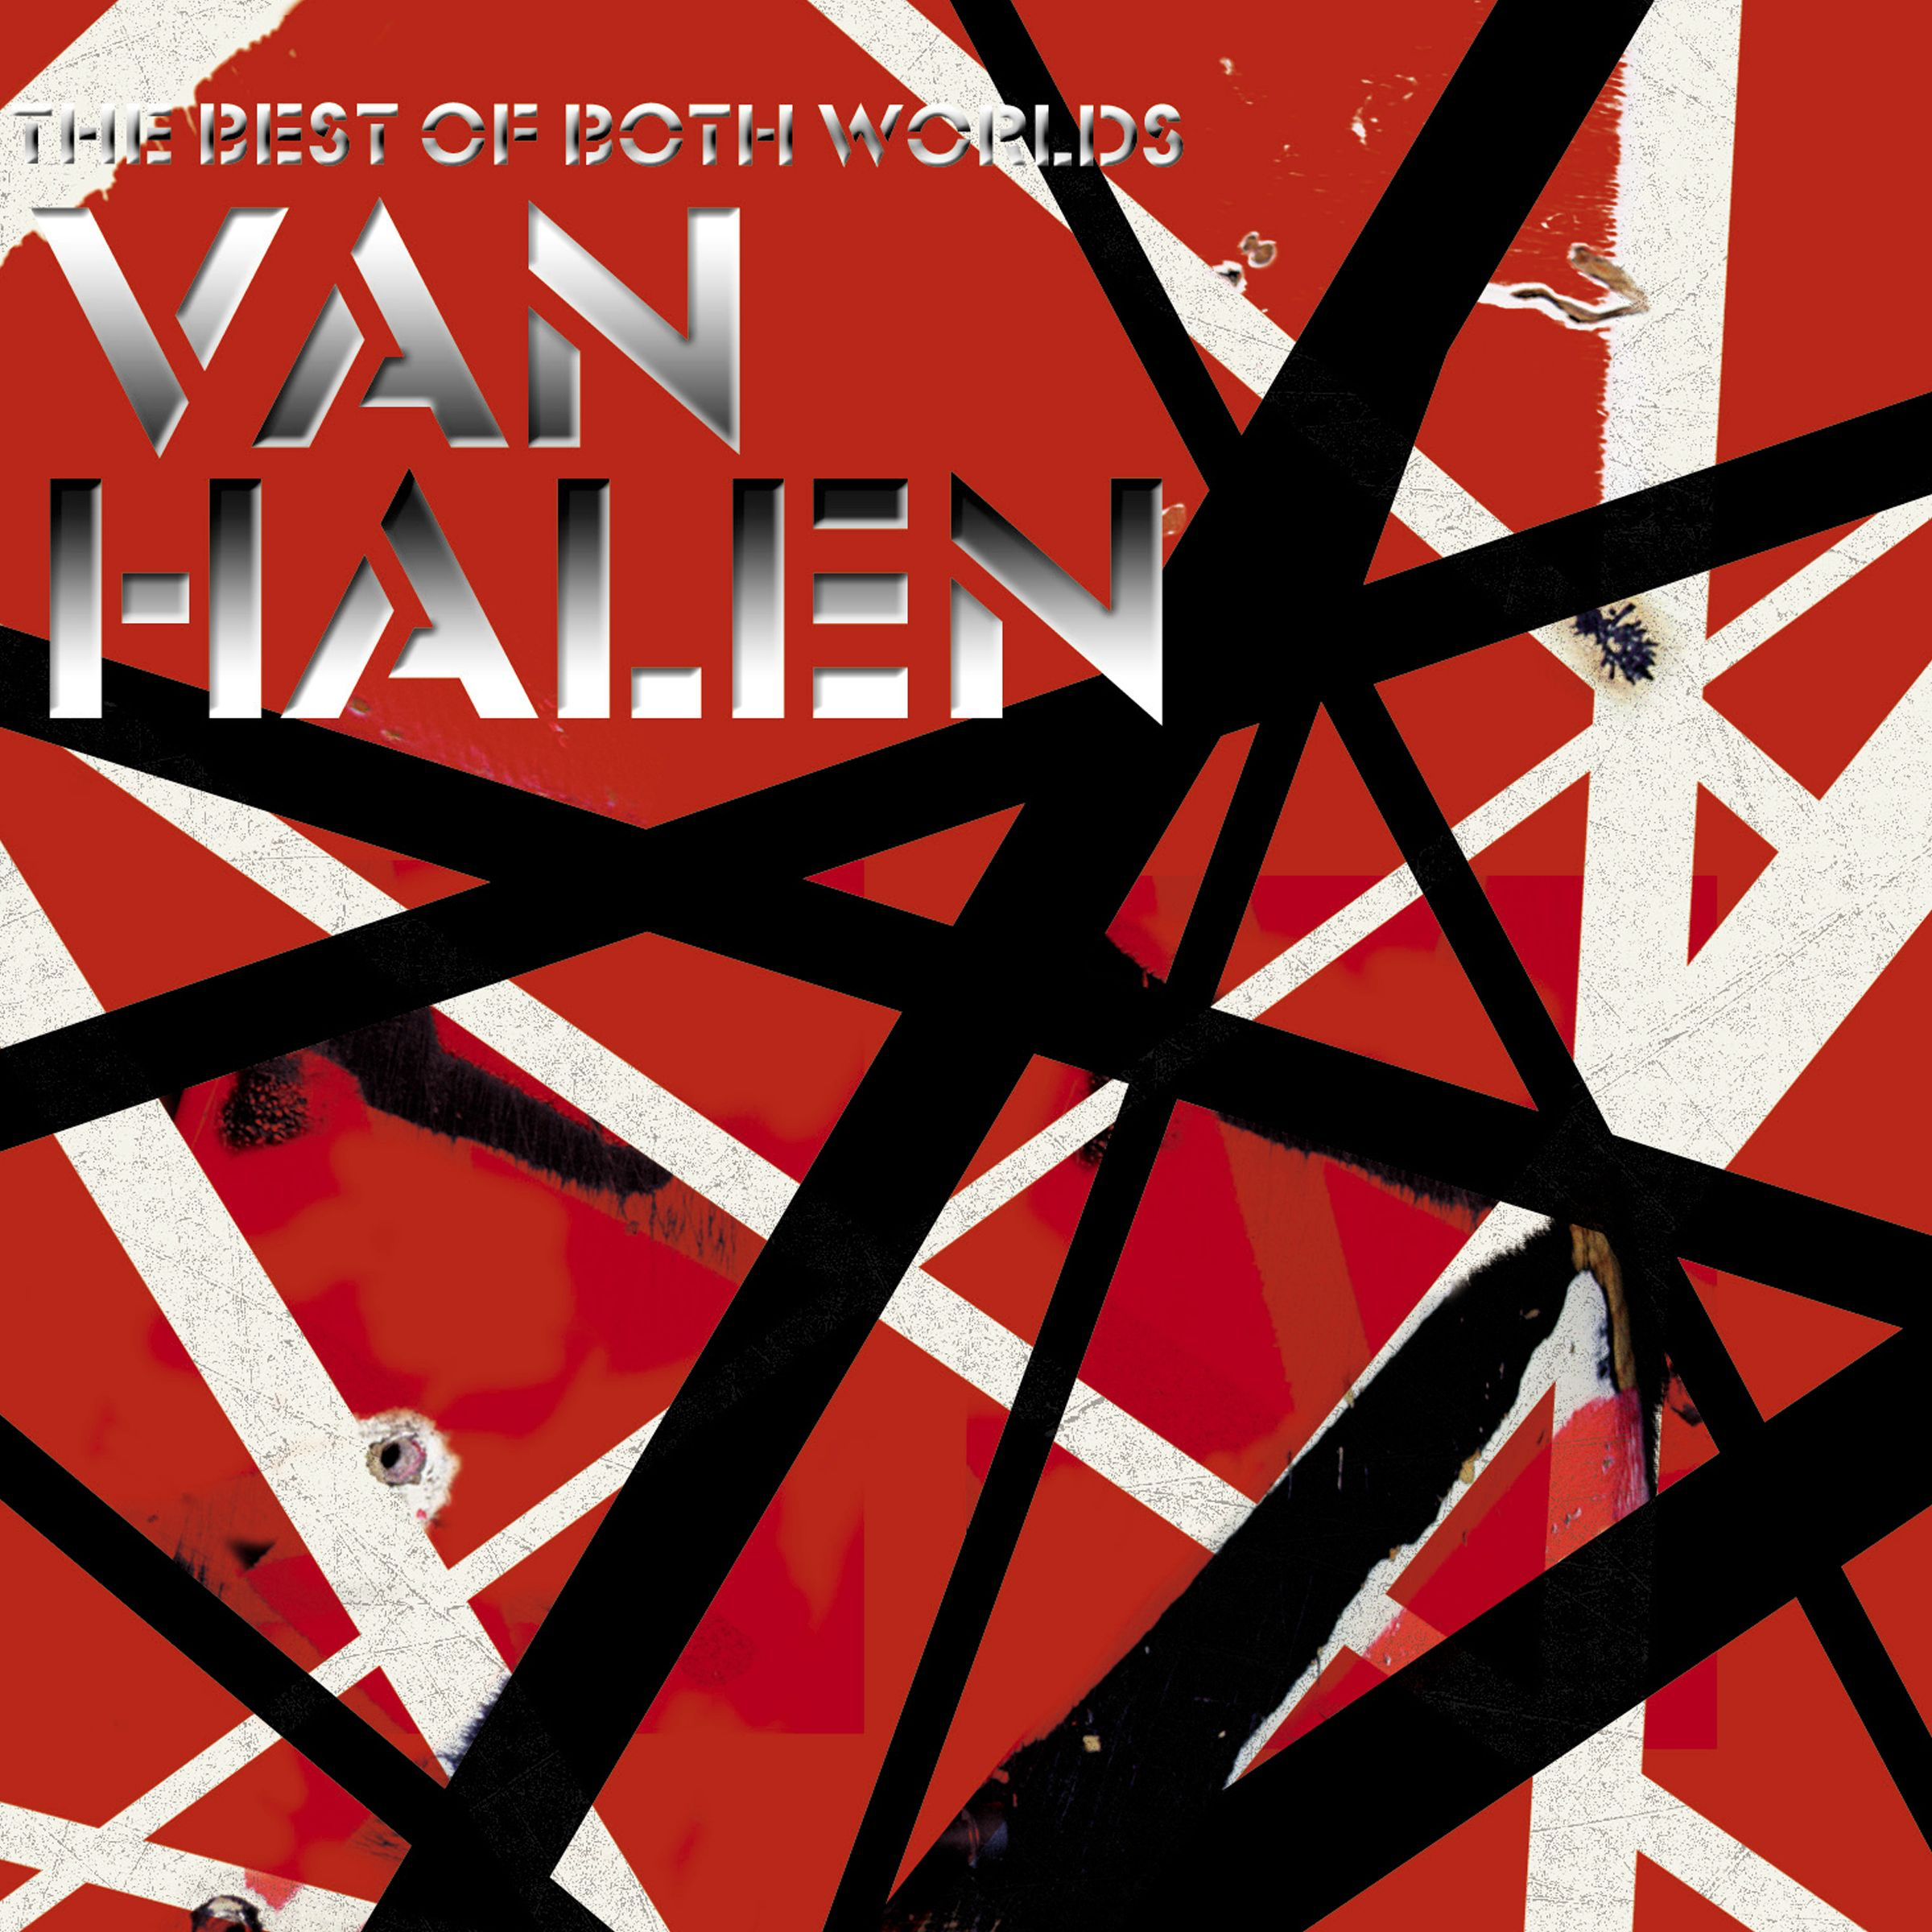 Van Halen (ヴァン・ヘイレン) ベスト・アルバム『The Best Of Both Worlds (ヴェリー・ベスト・オブ・ヴァン・ヘイレン)』(1996年10月17日発売) 高画質CDジャケット画像 (ジャケ写)